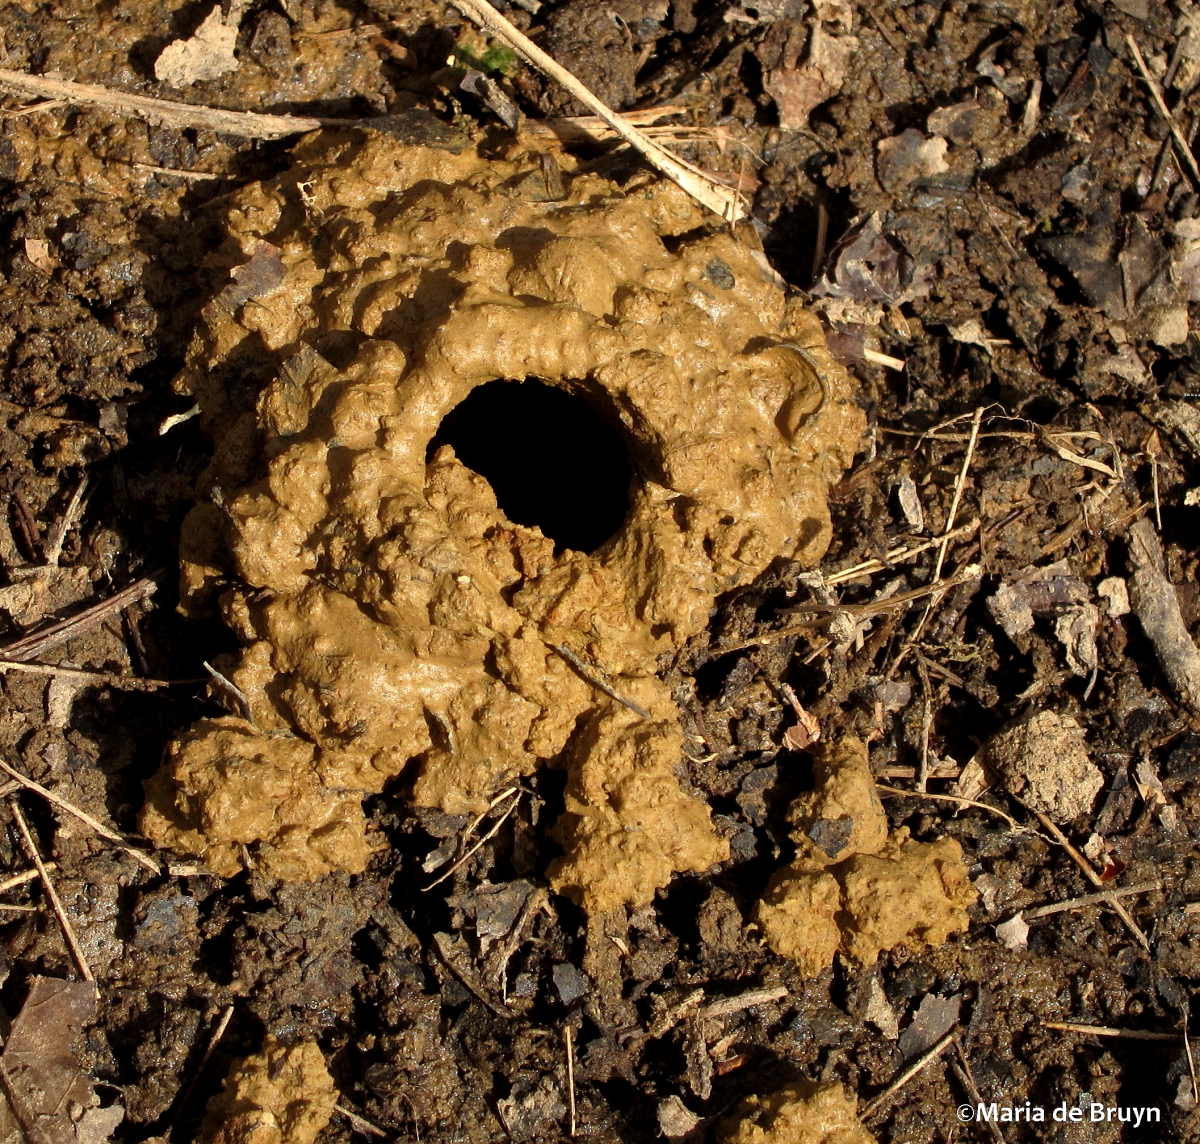 Digger wasp nest